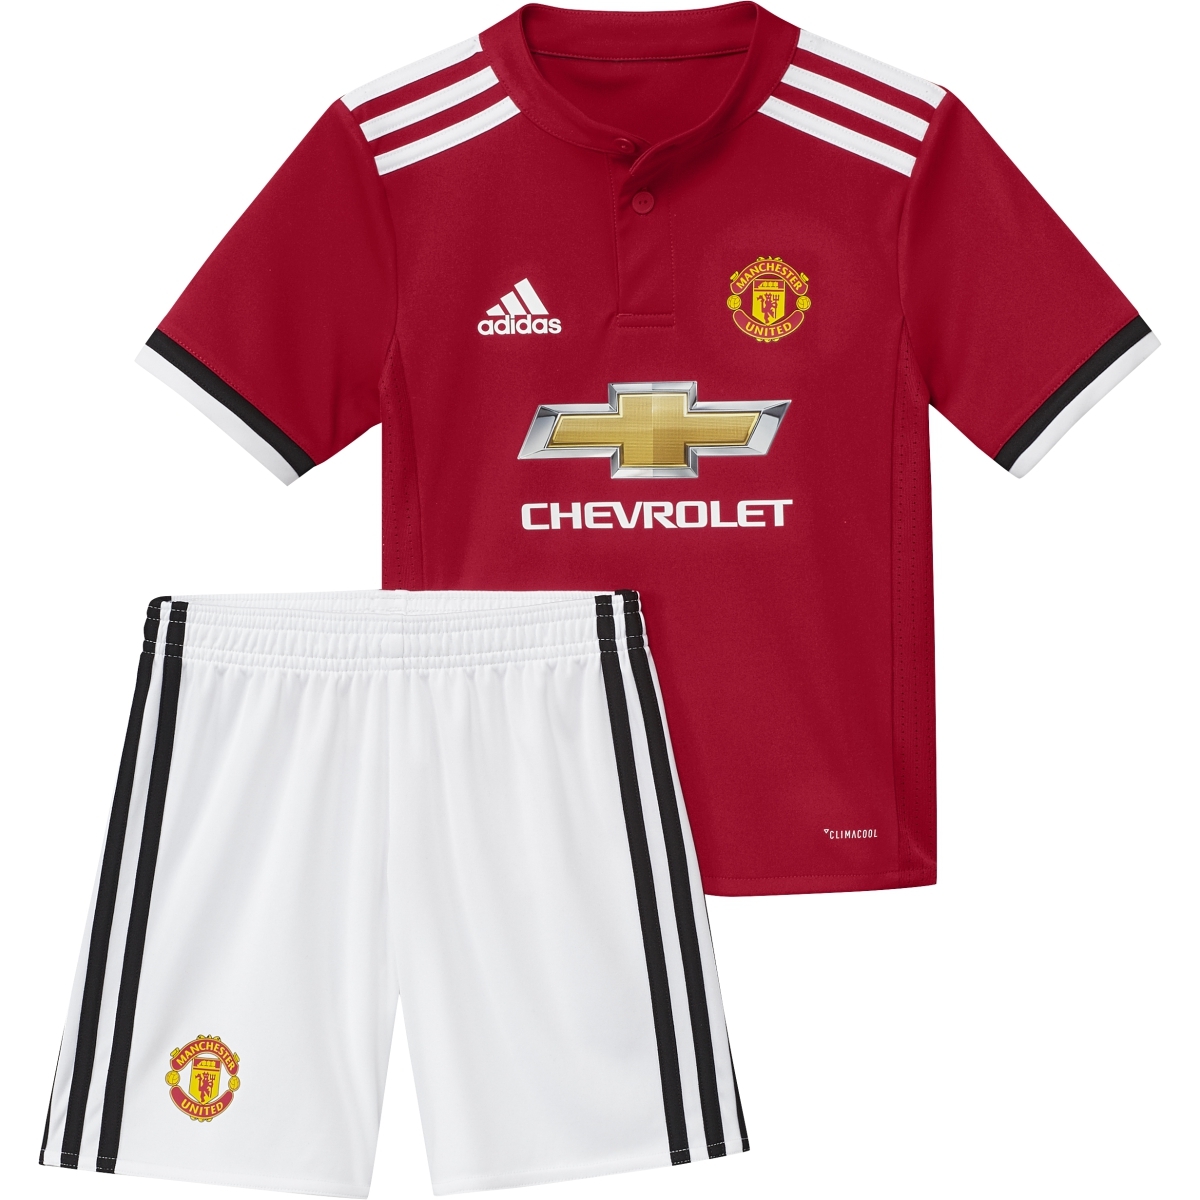 Adidas Manchester United Kids Home Stadium Jersey Kit 2017/18 - Soccer ...